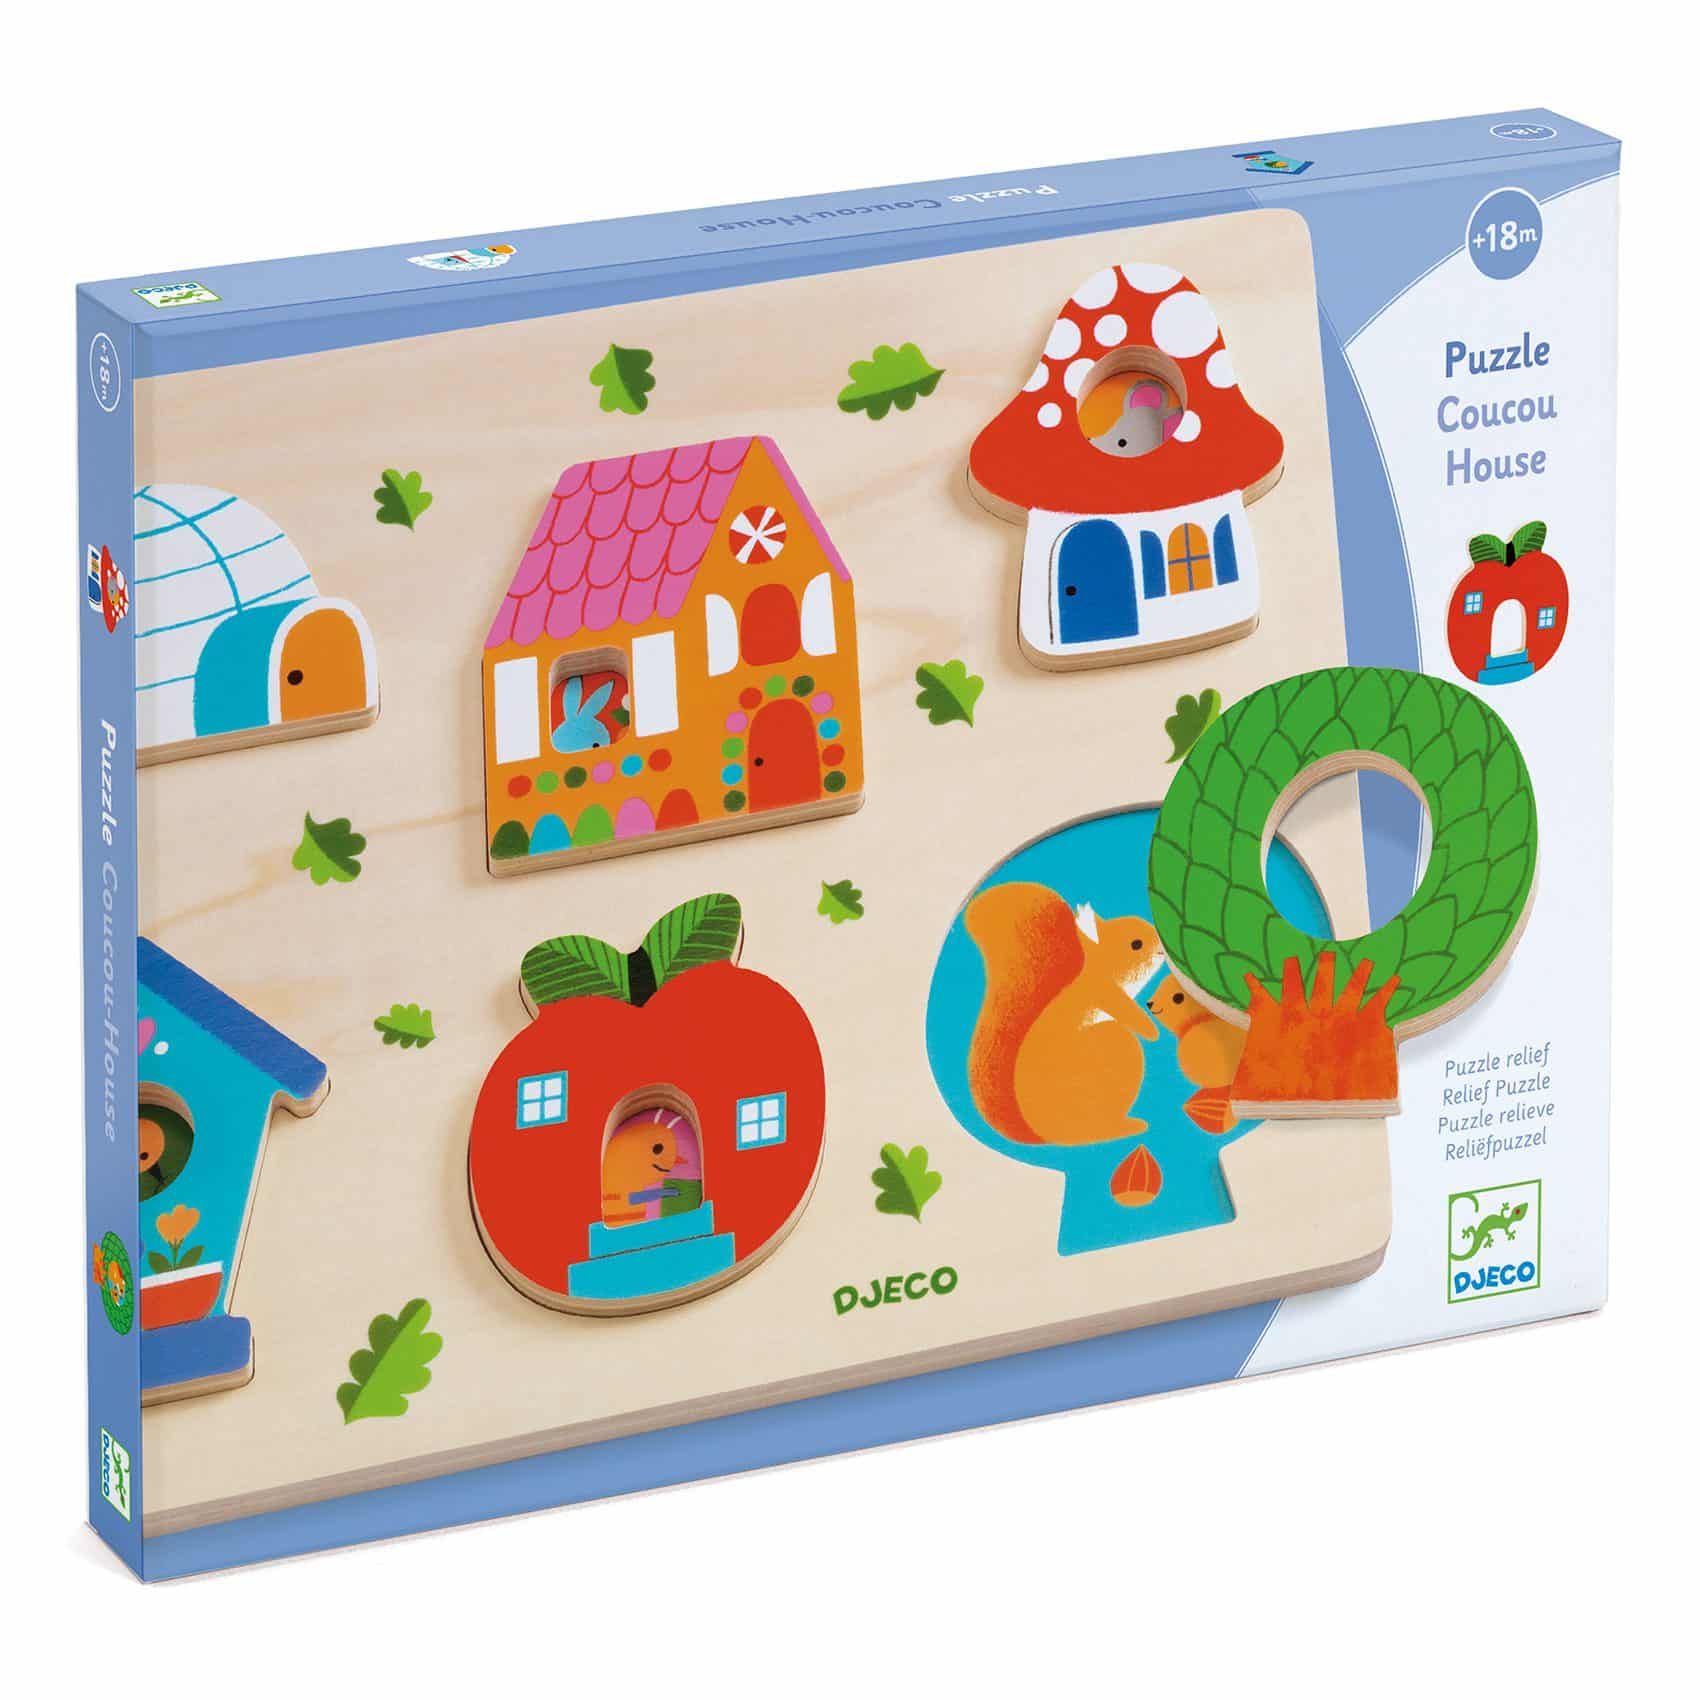 Coucou House – Puzzle de Formas e Animais | Djeco Djeco Mini-Me - Baby & Kids Store